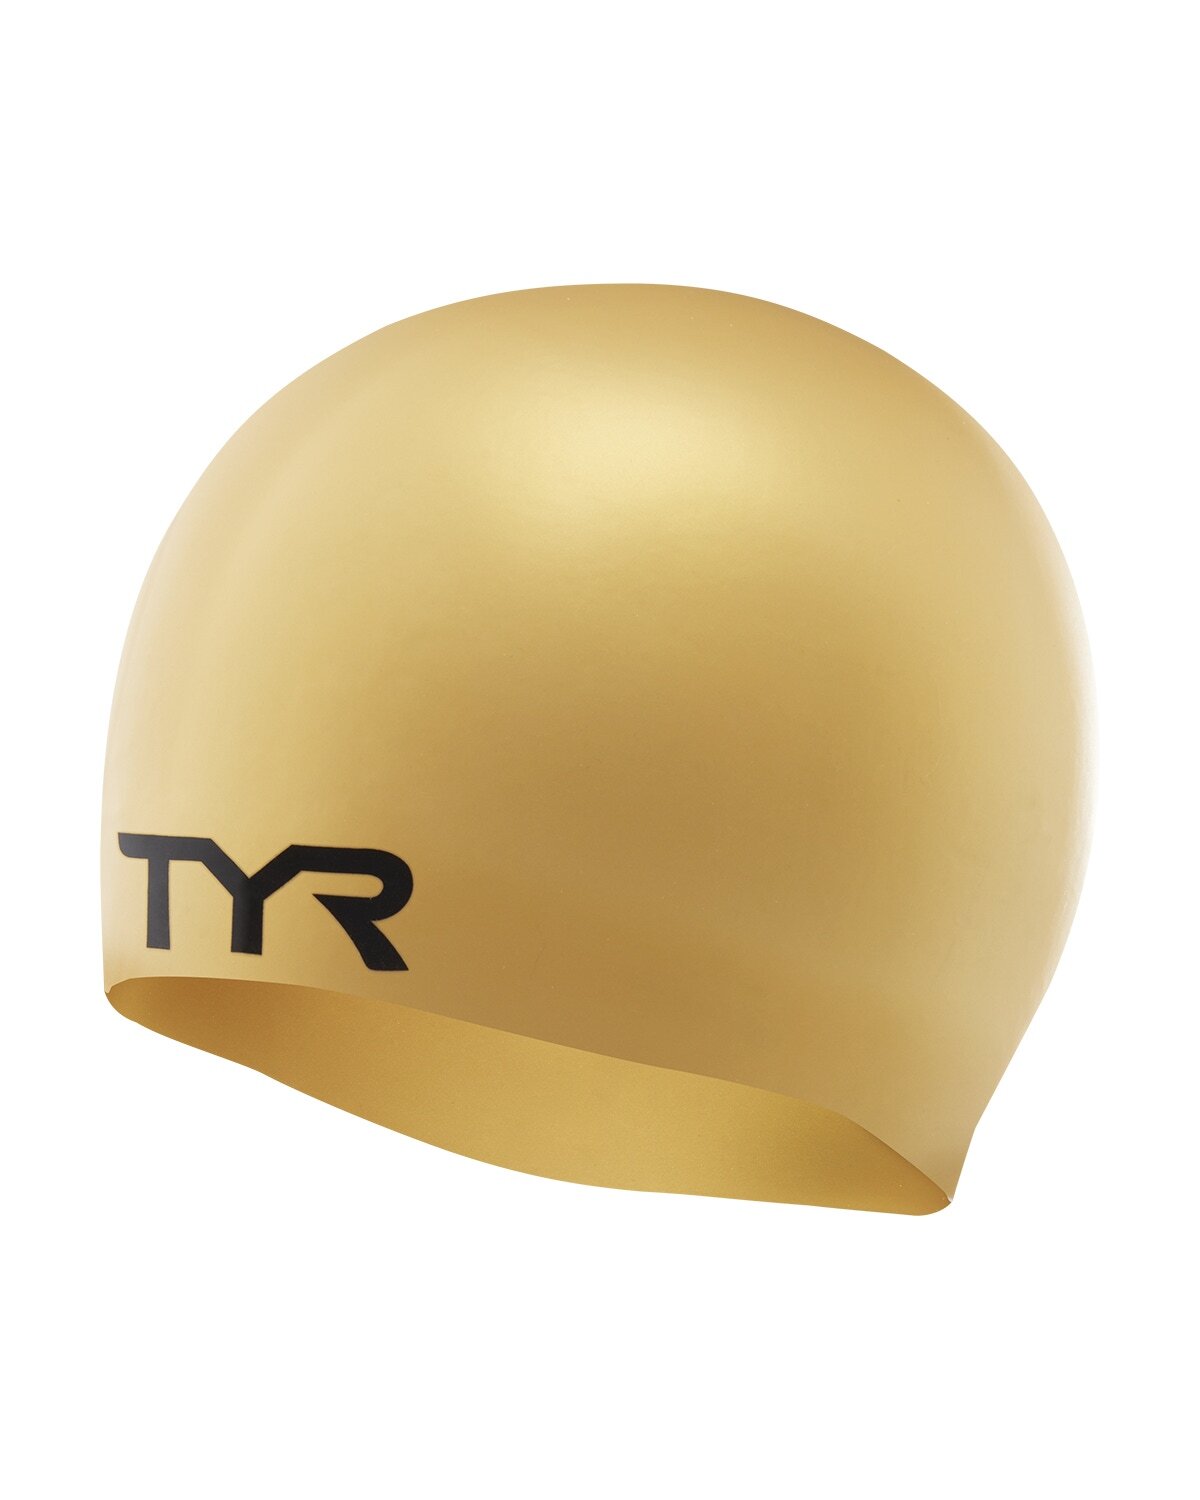 TYR Gold Wrinkle-Free Silicone Swim Cap